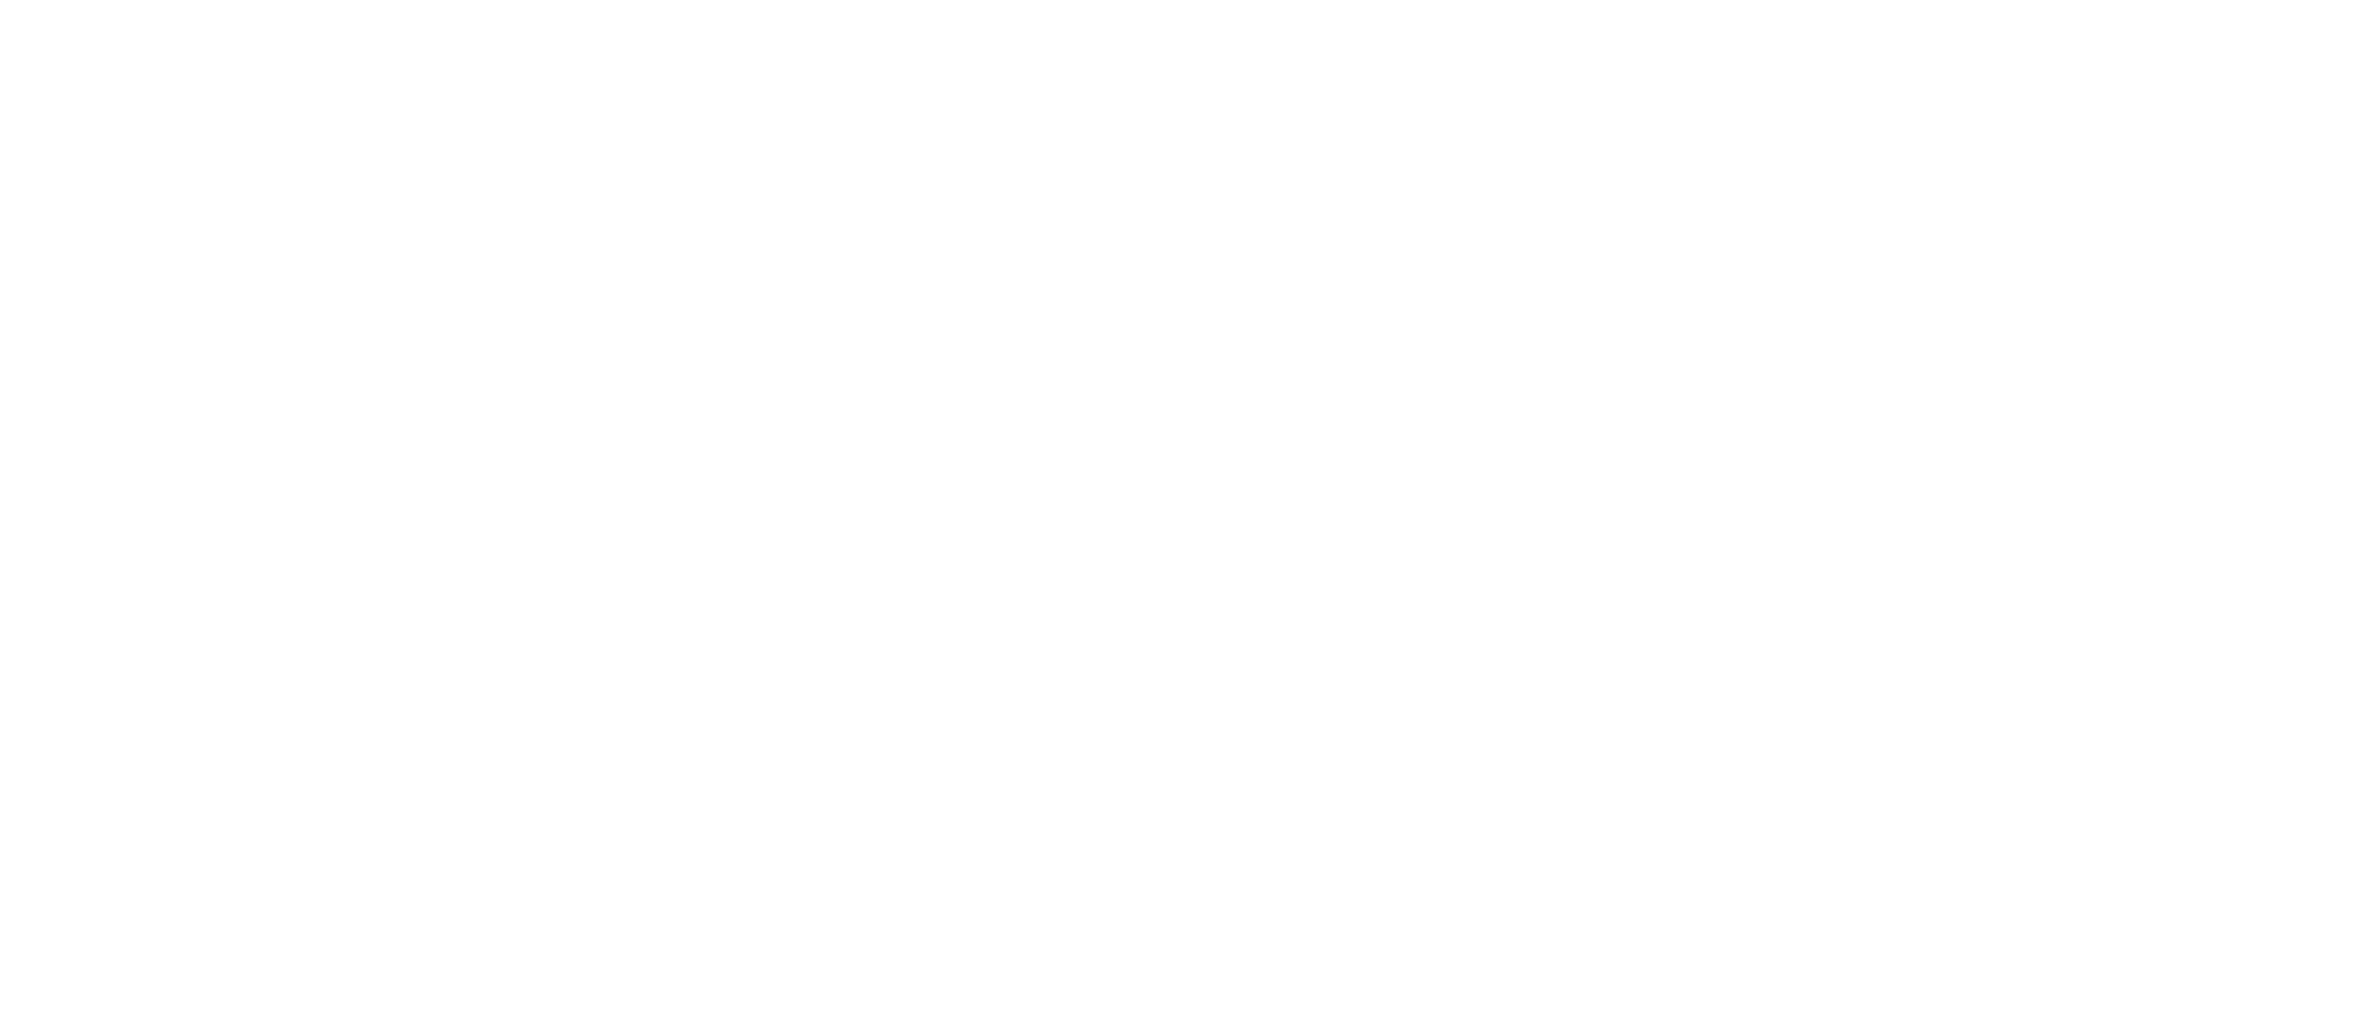 Annual Celebration logo.